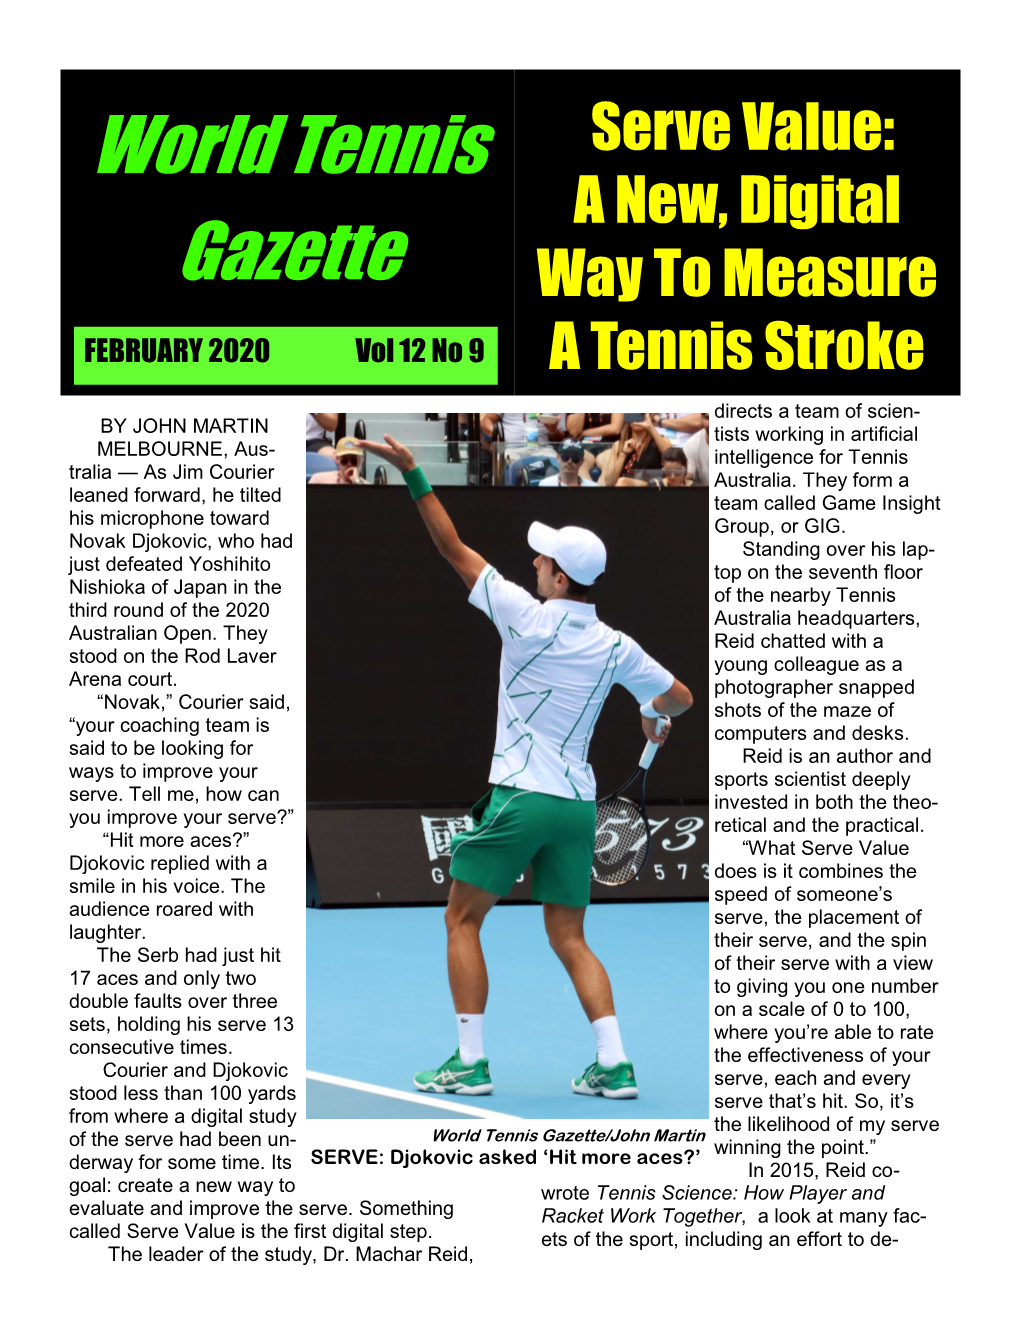 View and Download World Tennis Gazette Vol. 12 No. 9